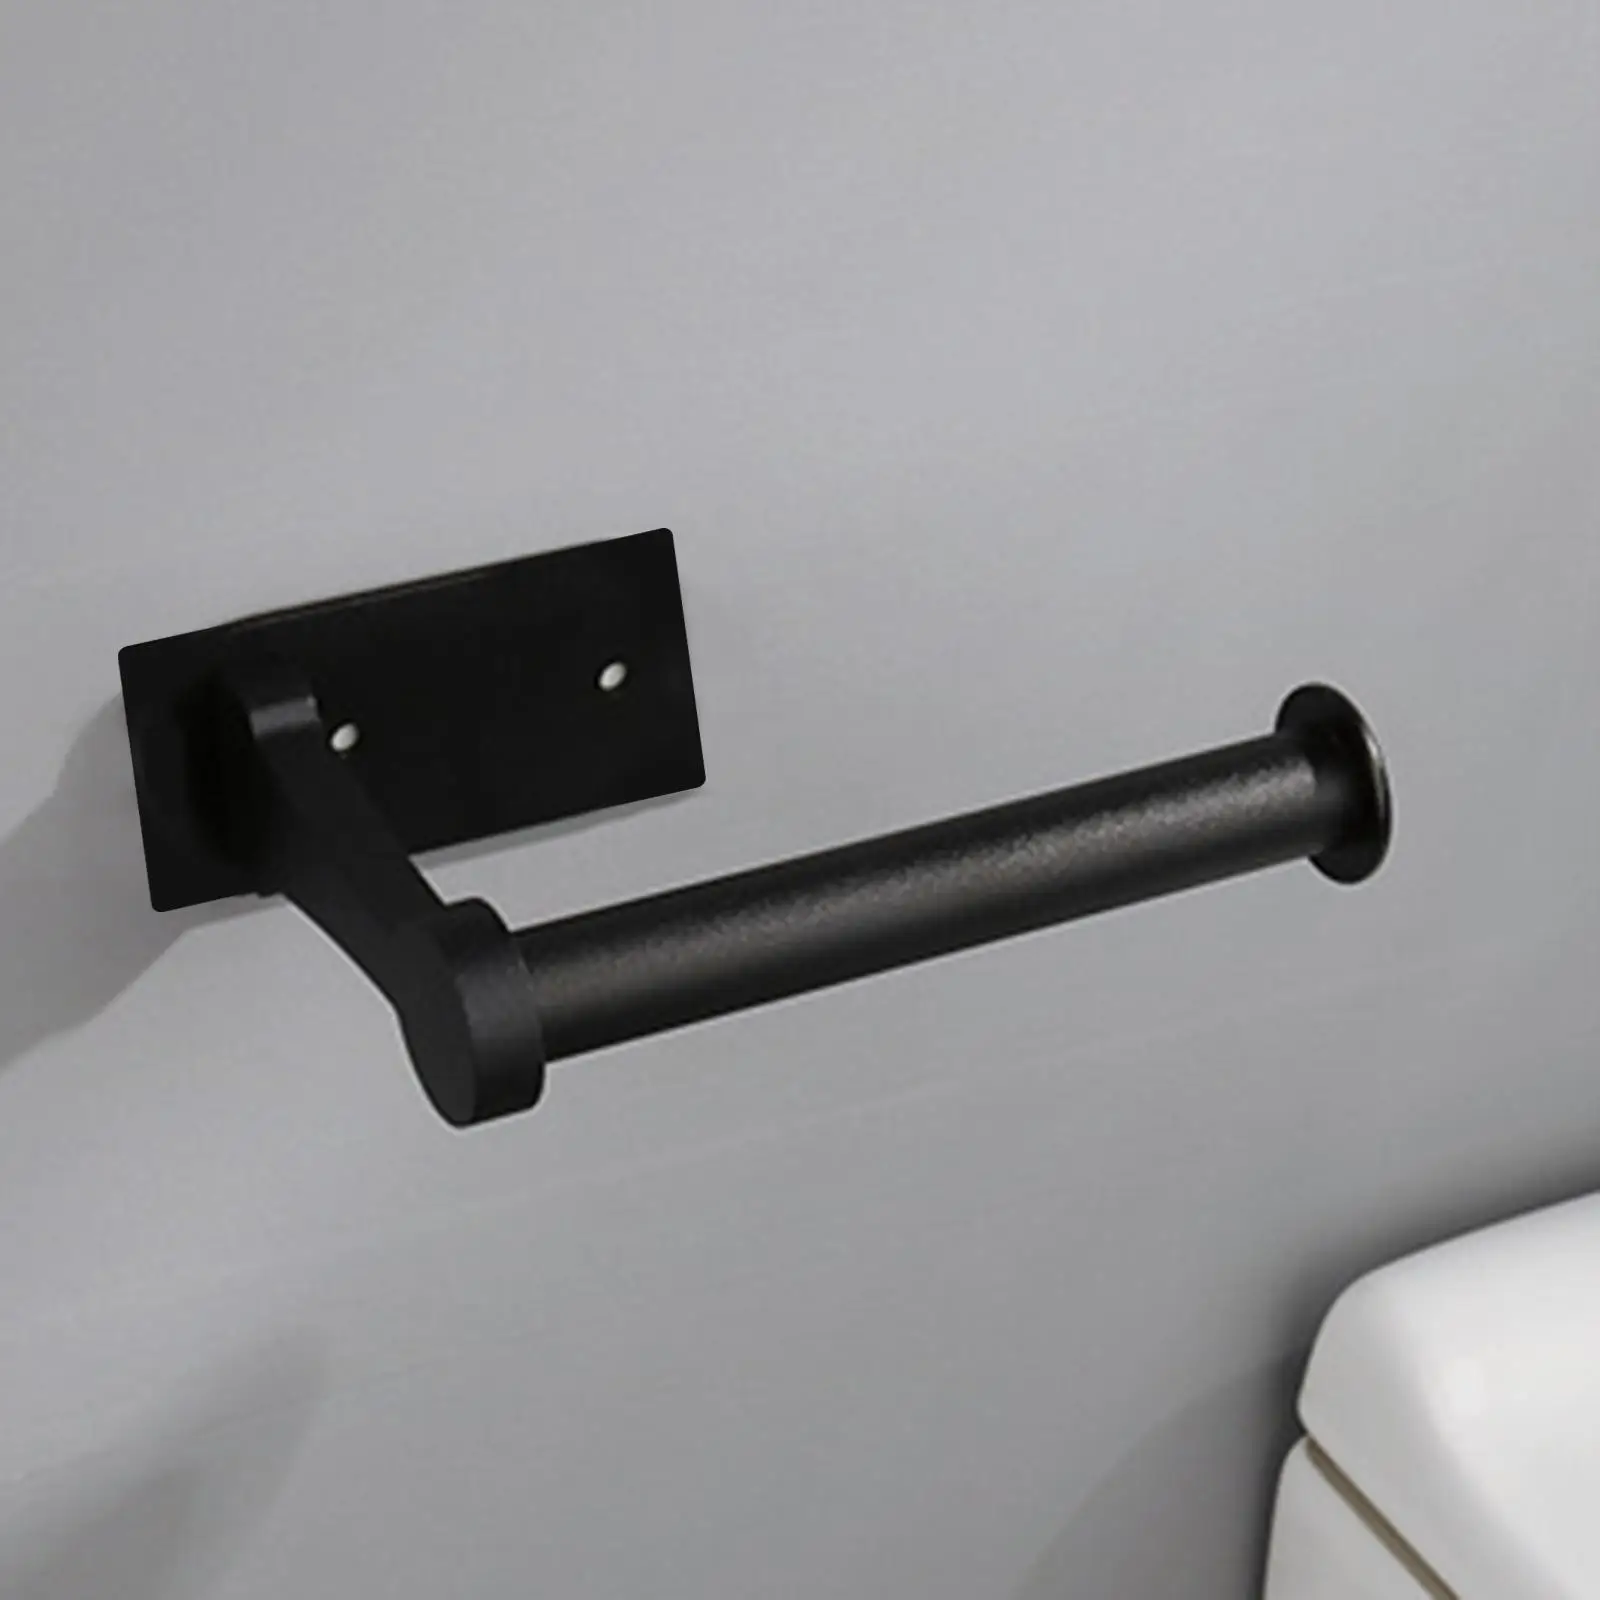 Aluminum Paper Towel Holder Paper Towel Dispenser Stand for Bathroom Kitchen